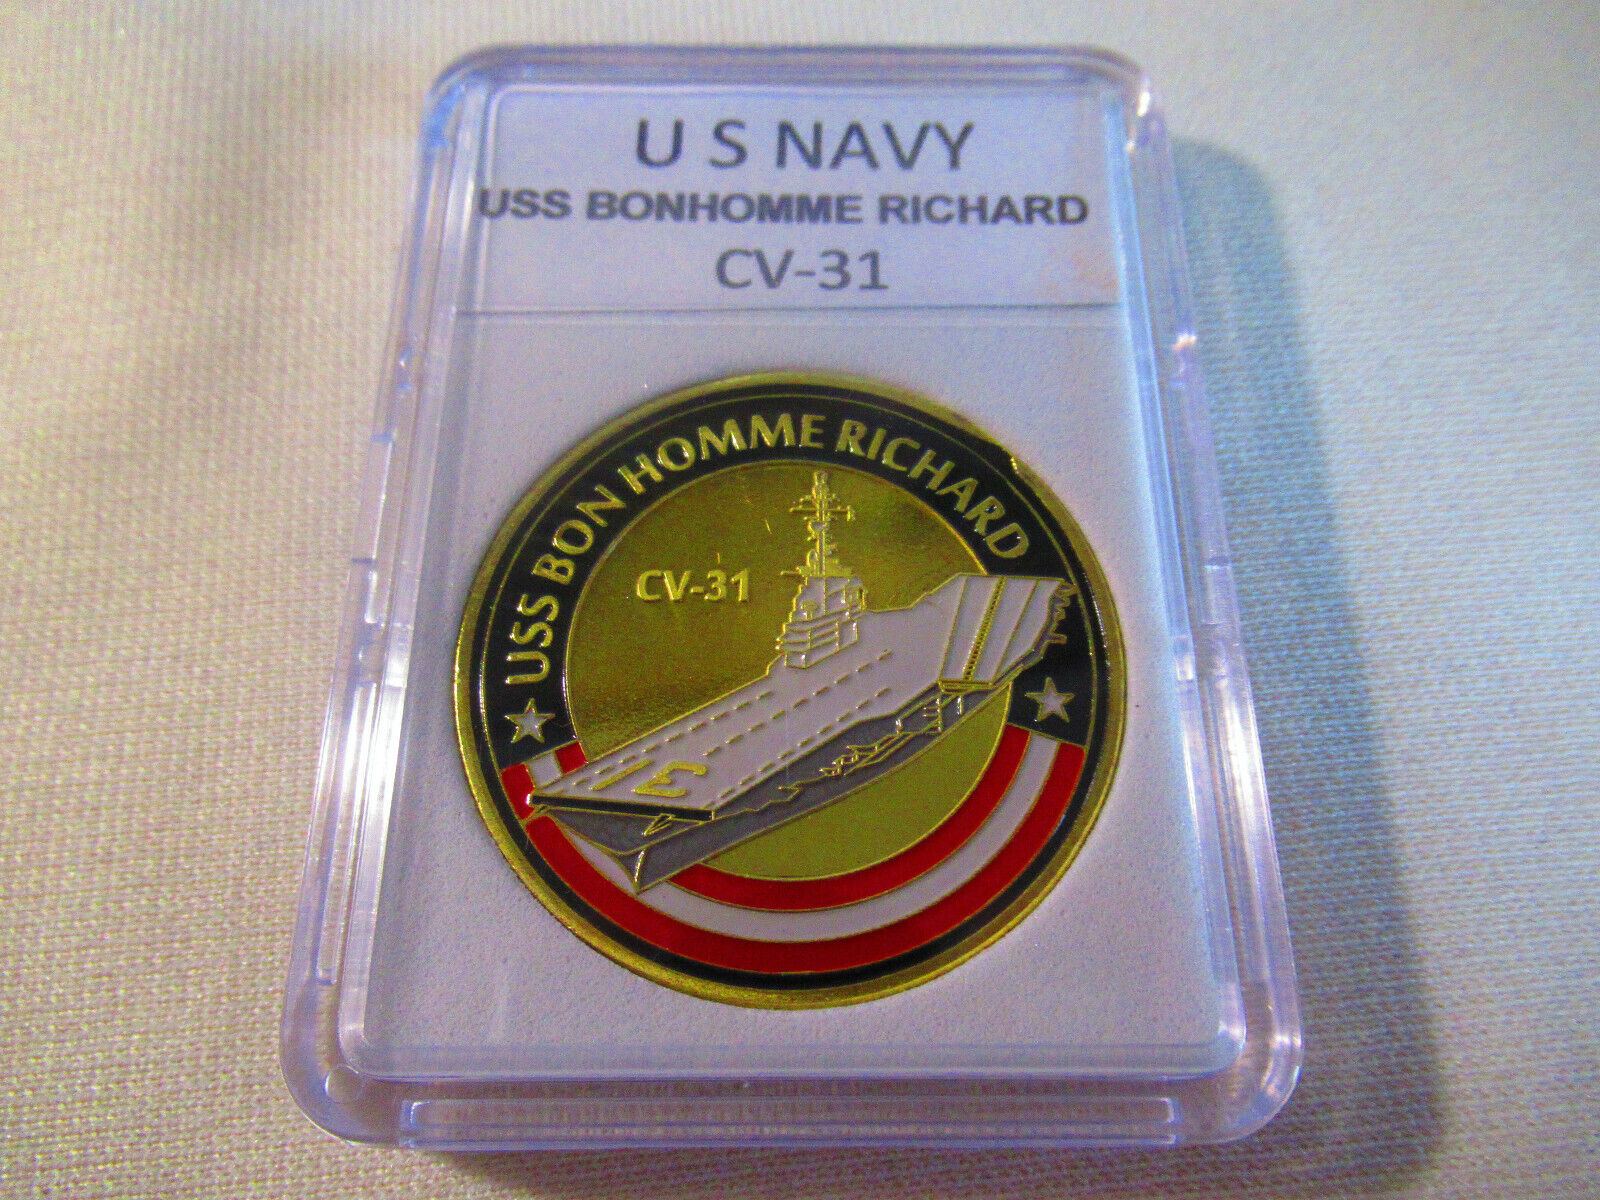 US NAVY - USS BON HOMME RICHARD CV-31 Challenge Coin